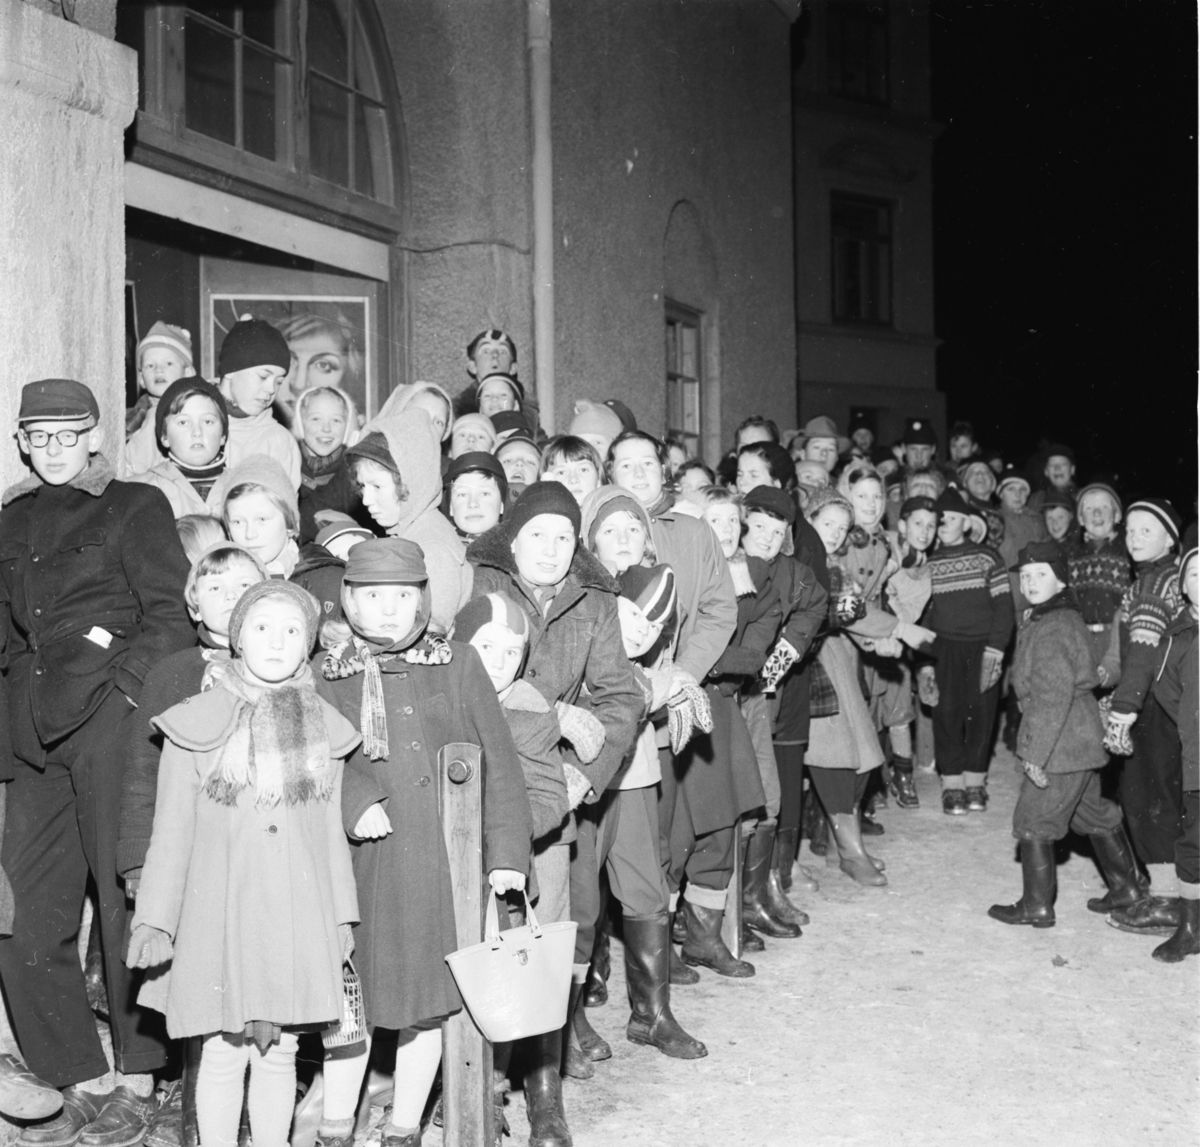 Vardens arkiv. "Barneforestilling på kino i Park Biografen " 04.03.1954